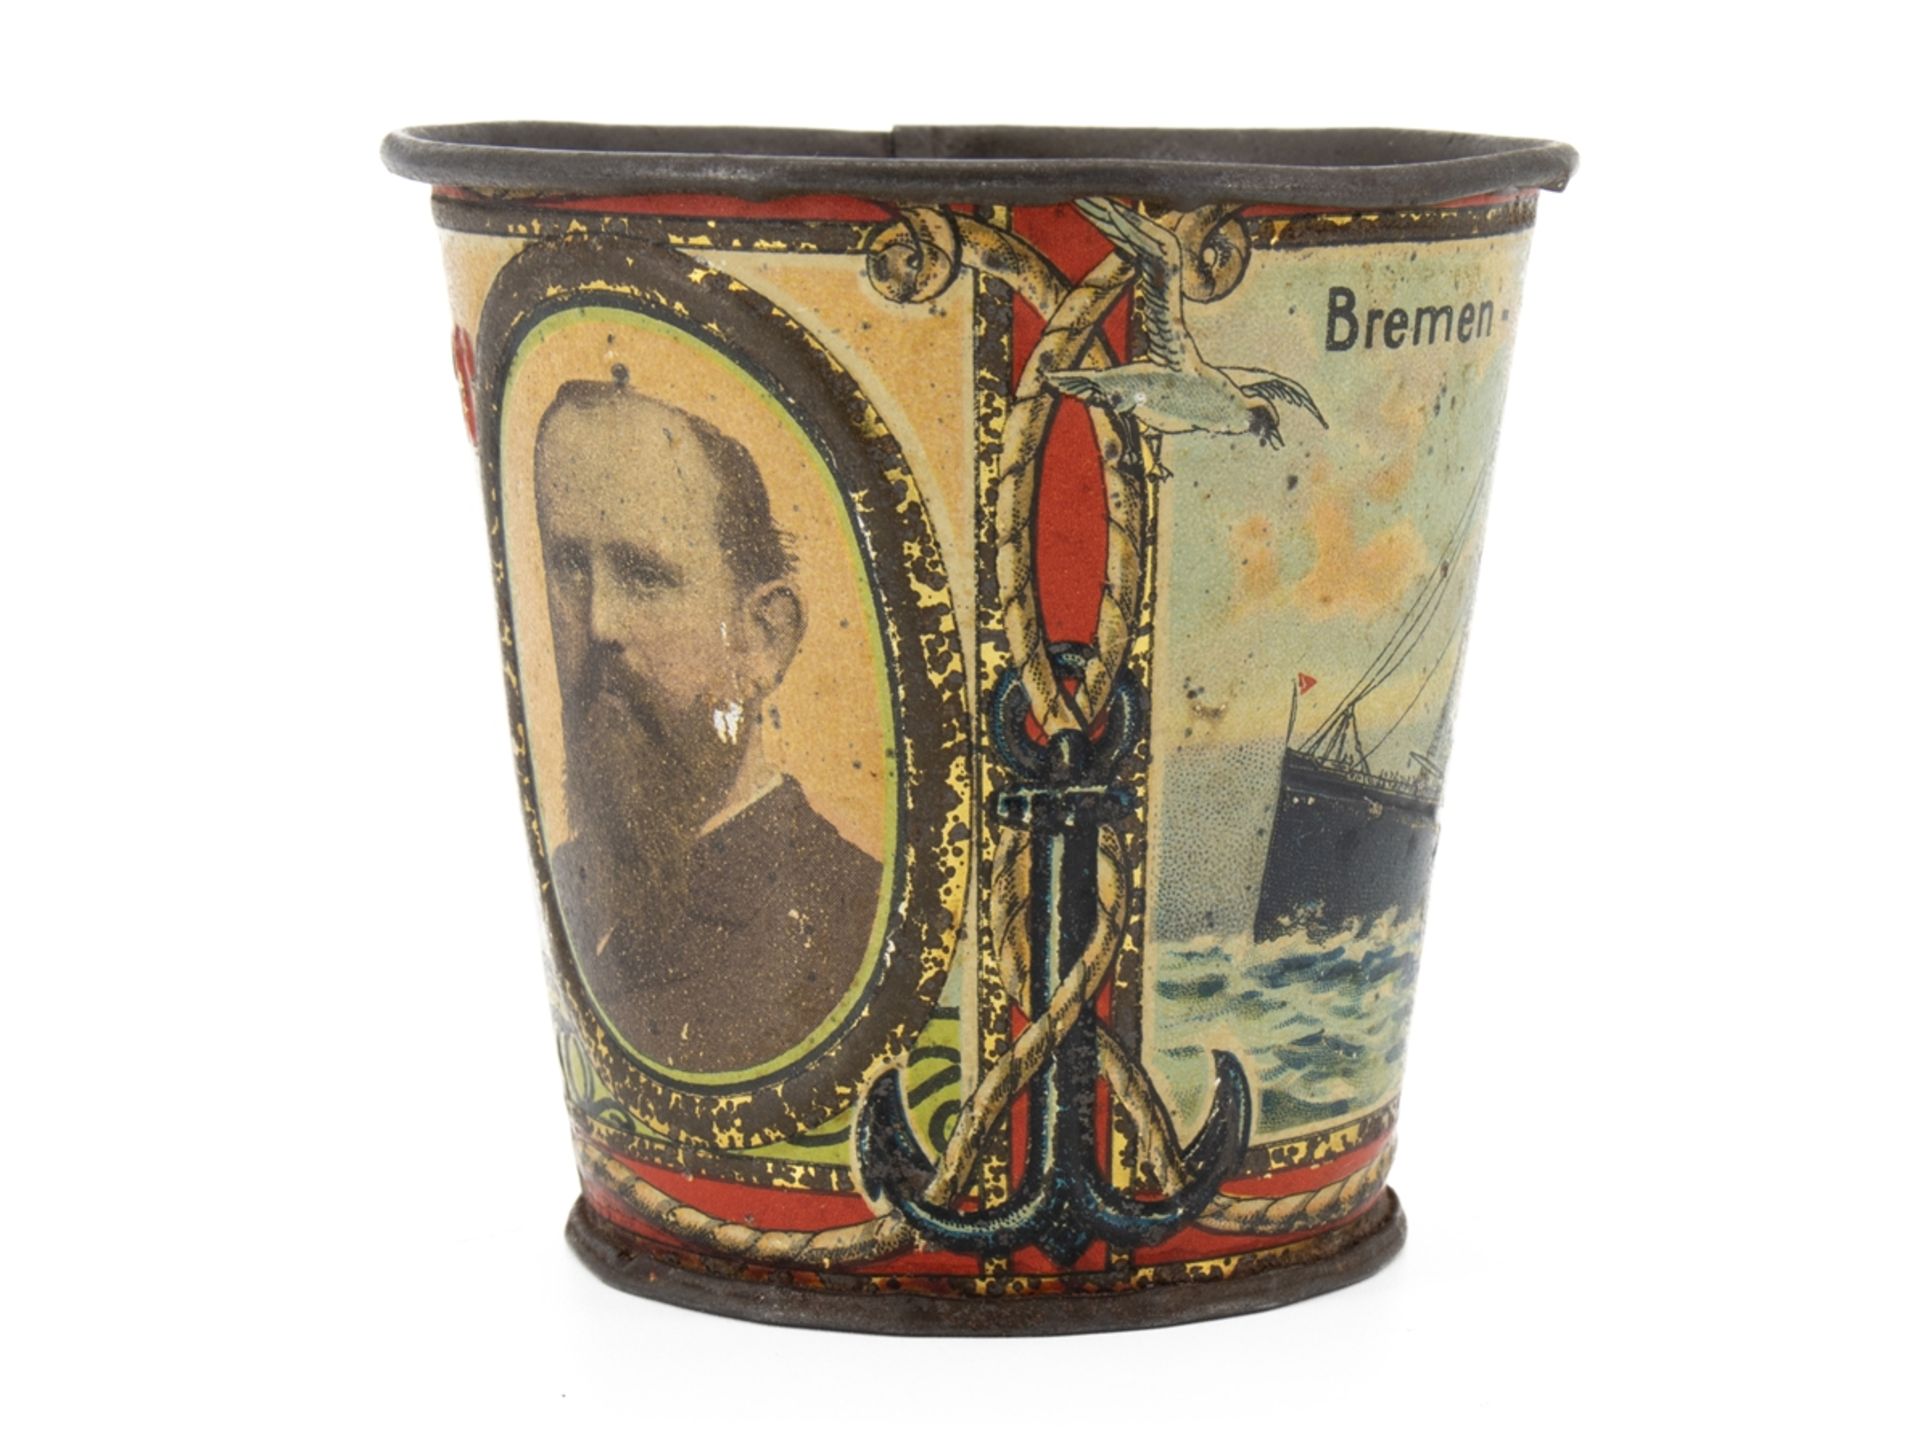 Mug Bremen-Amerika Linie, Art Nouveau, around 1900 - Image 5 of 7